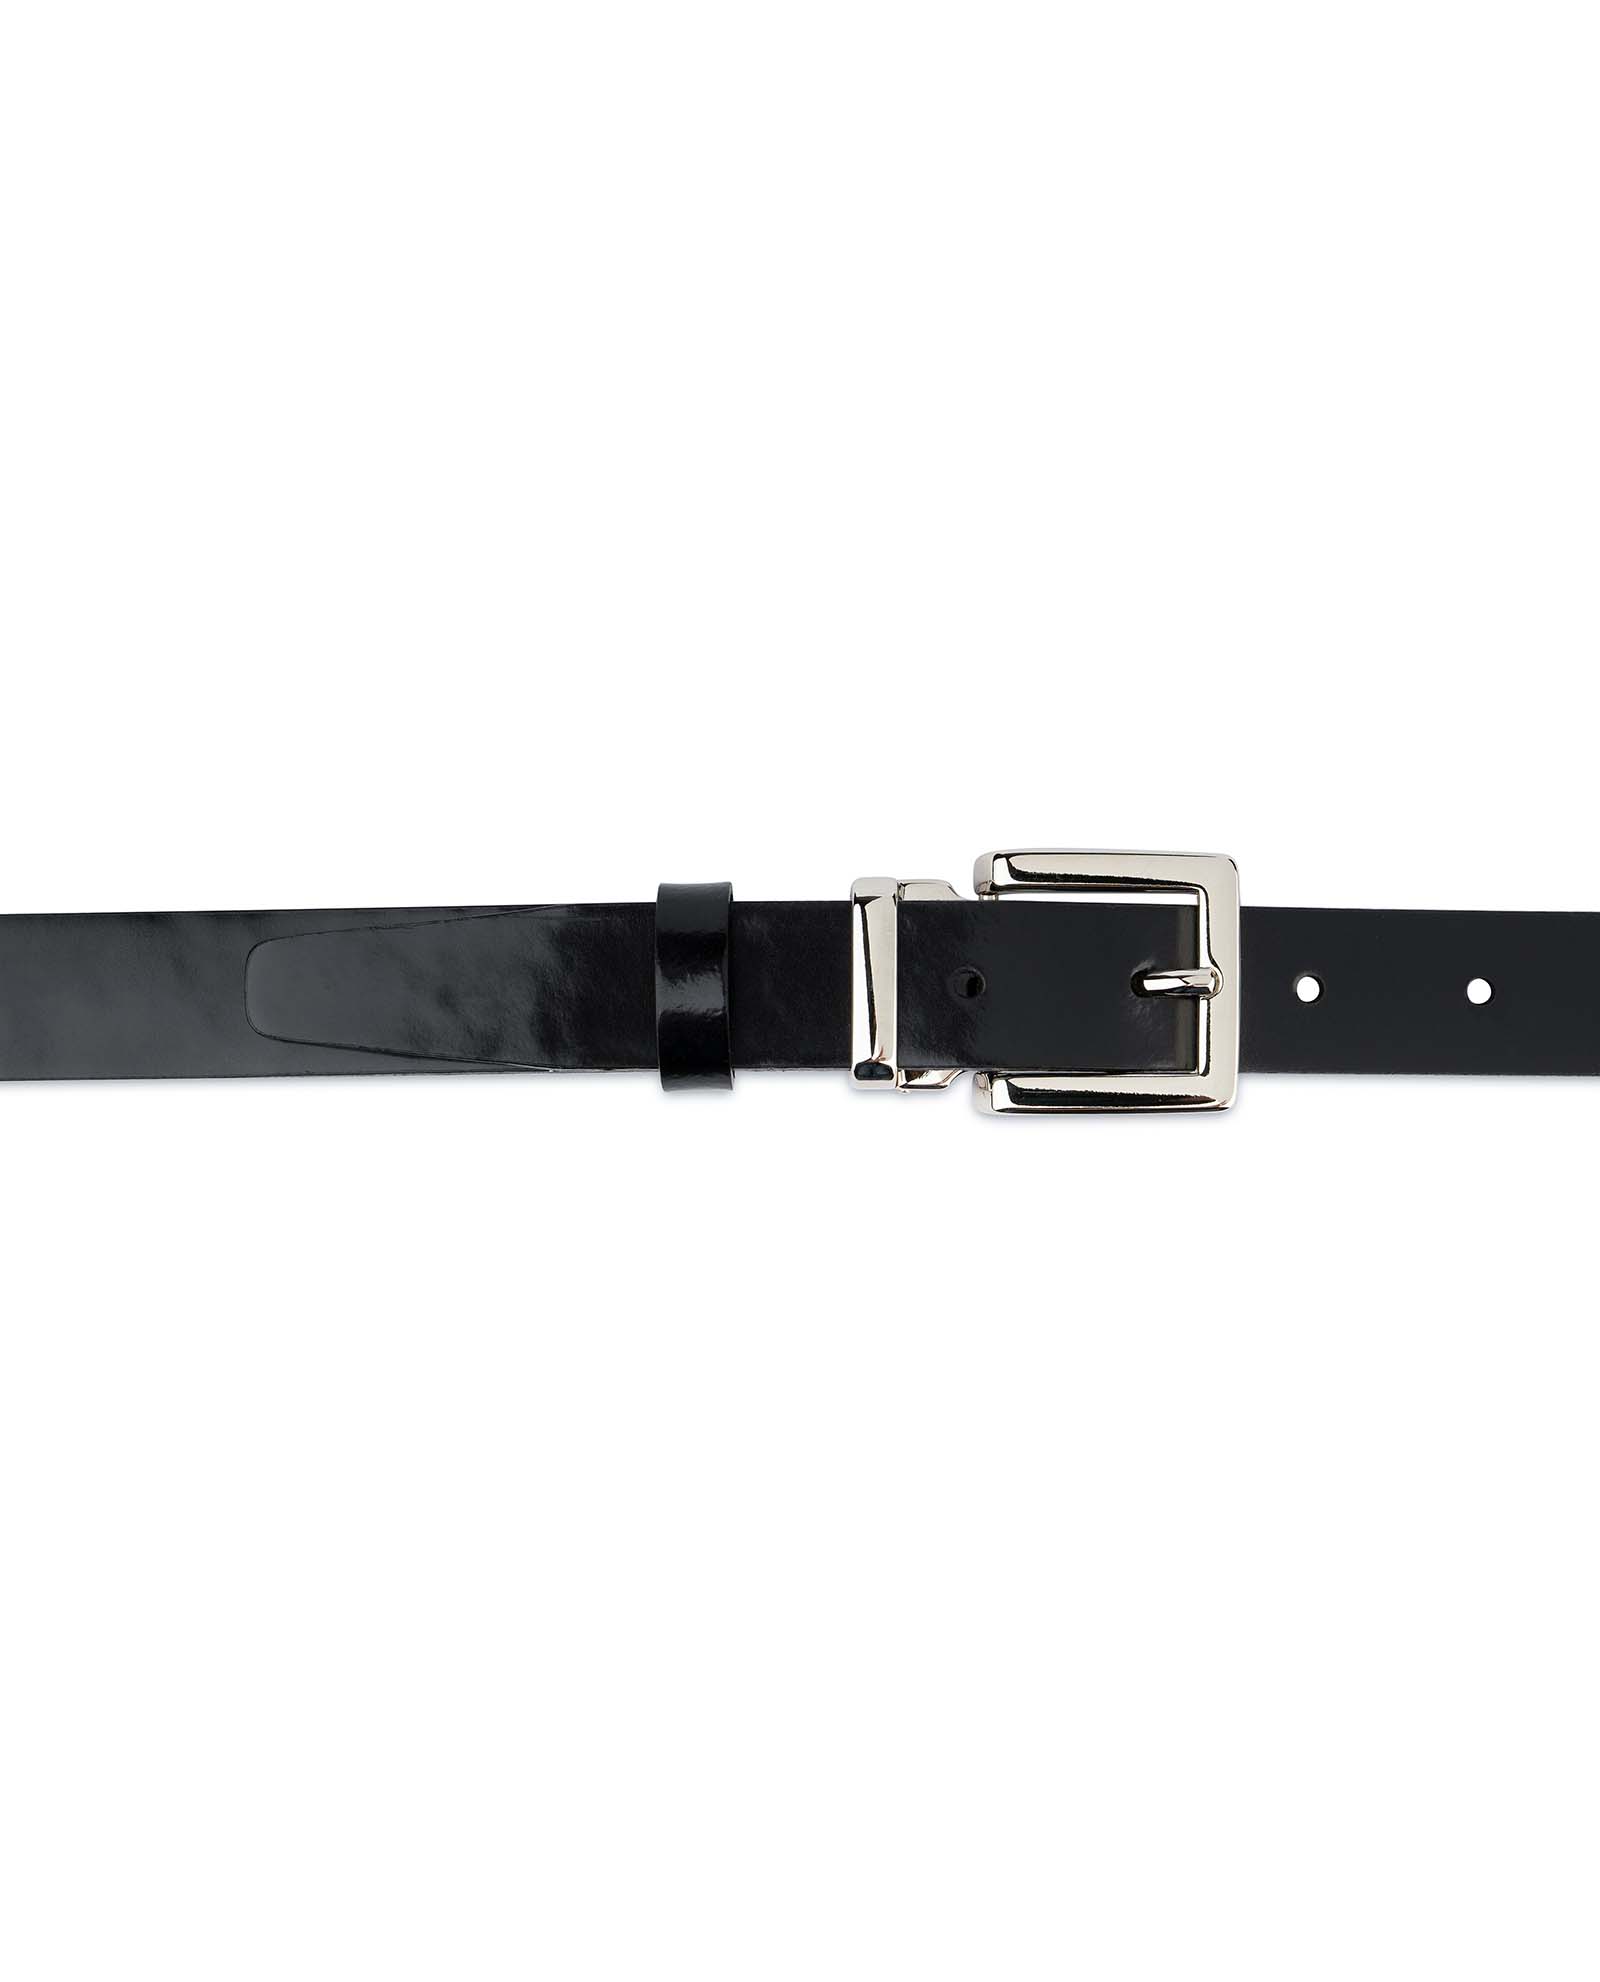 Black Patent Leather Belt 1 inch Wide